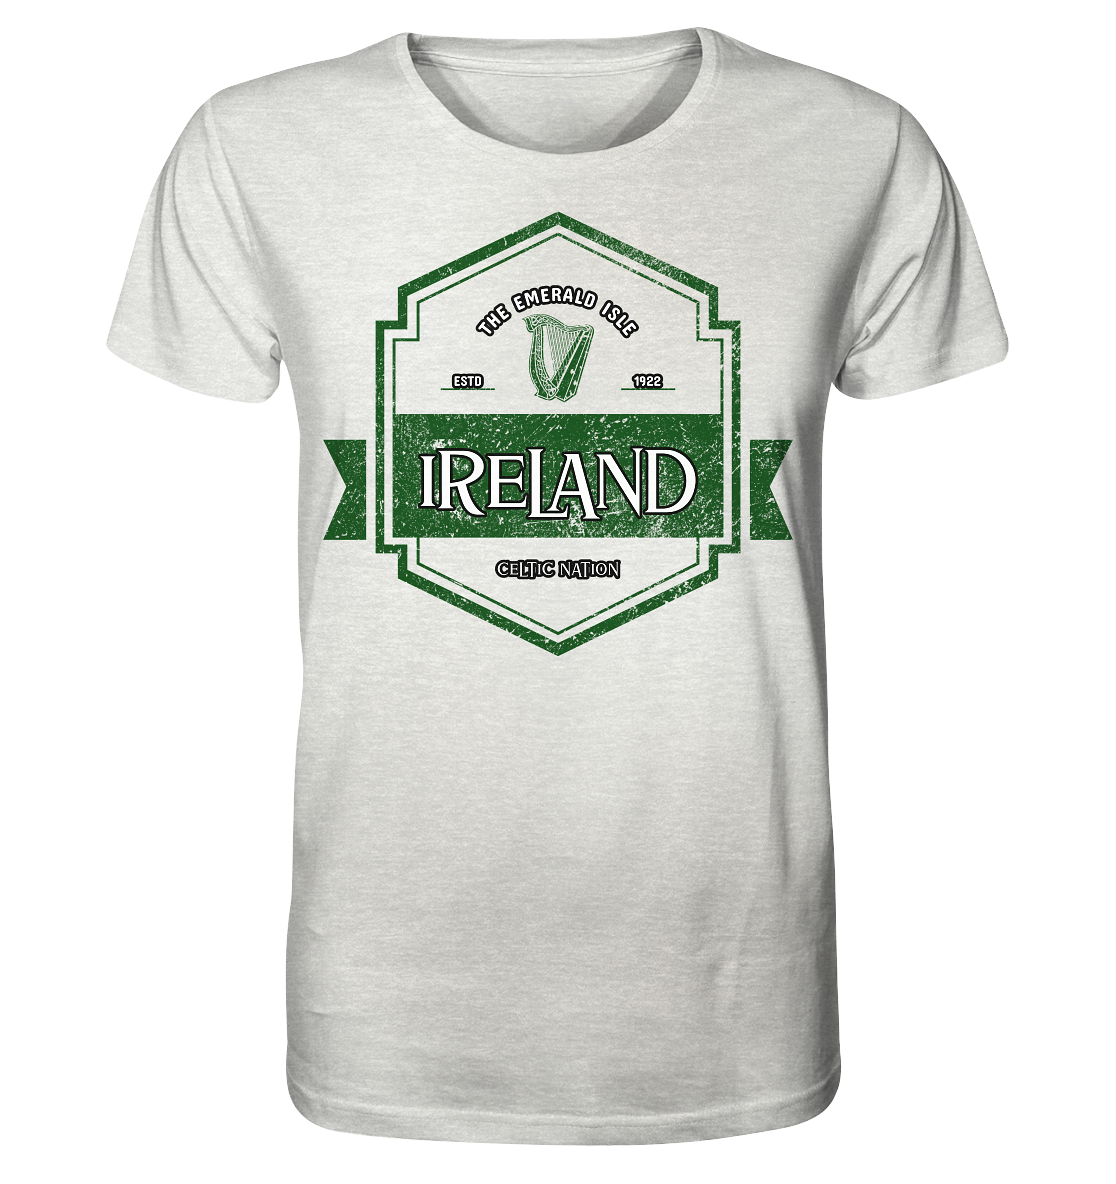 Ireland "The Emerald Isle / Celtic Nation" - Organic Shirt (meliert)